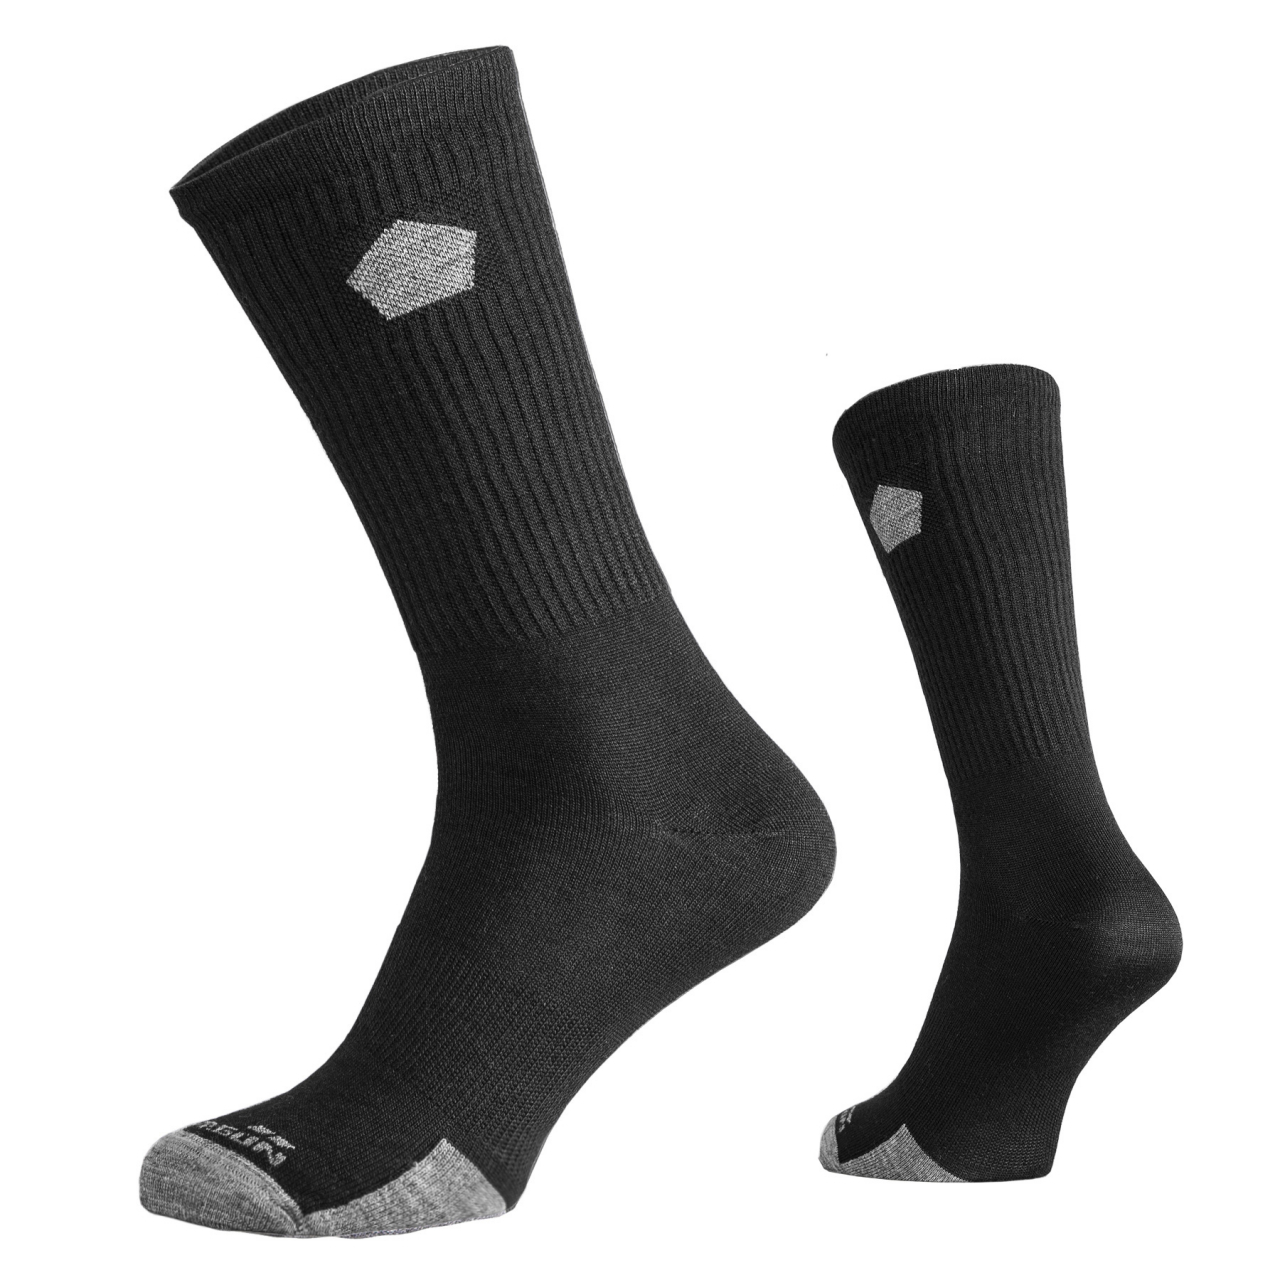 Ponožky Pentagon Alpine Merino Light - černé, 39-41